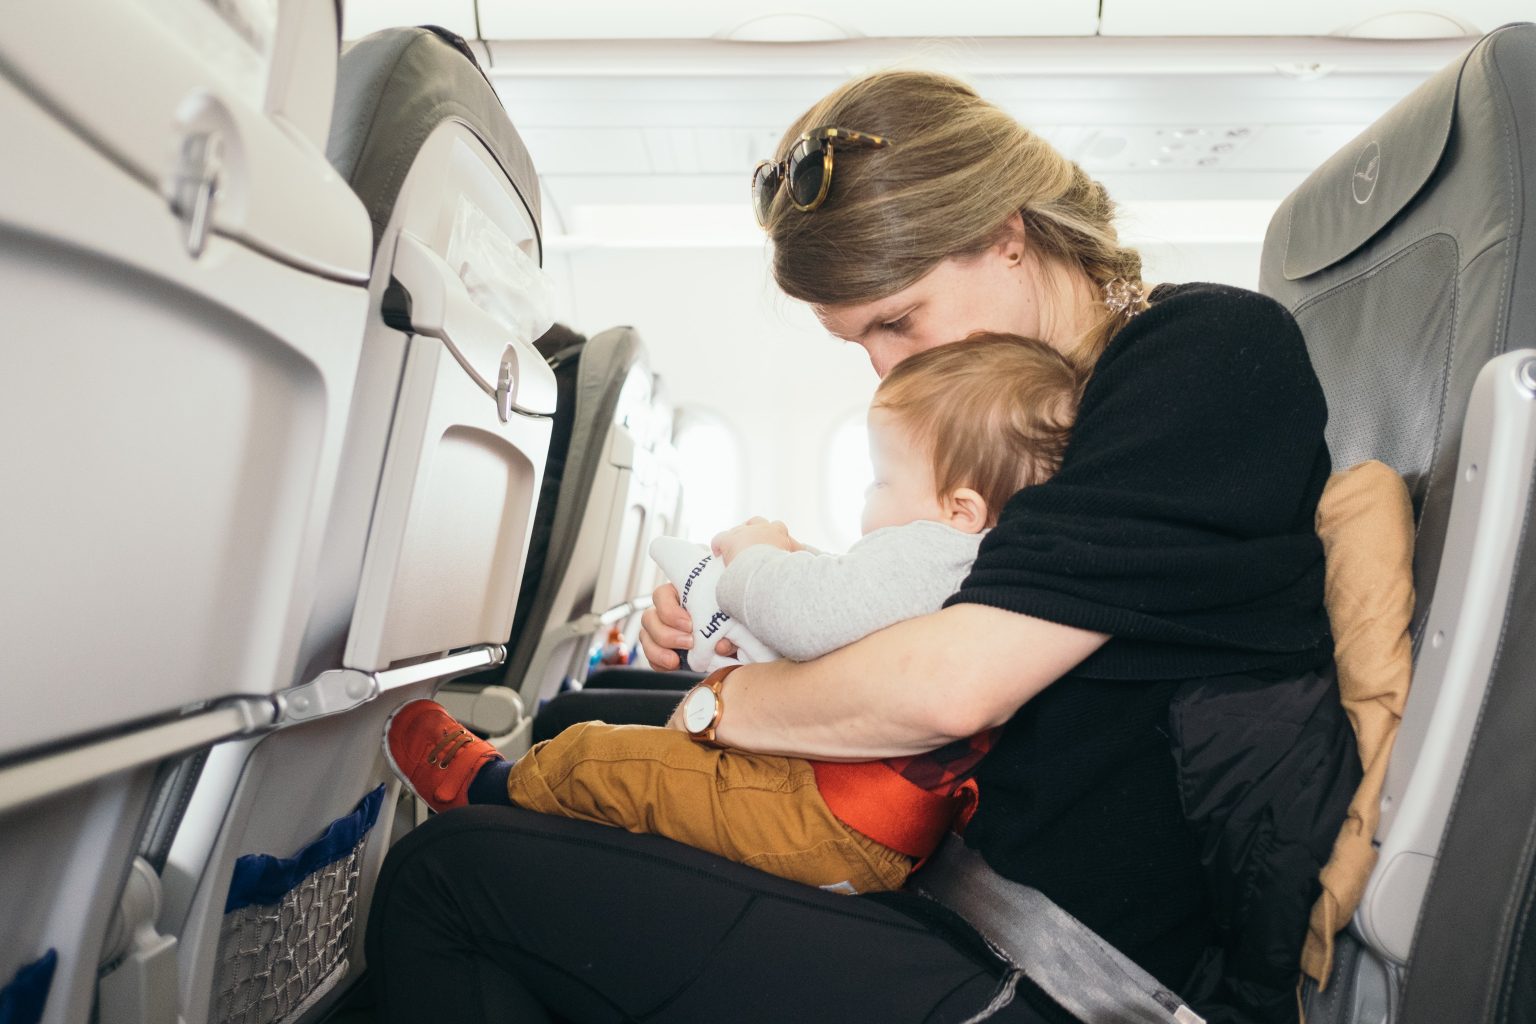 conseil voyage avion bebe 2 ans